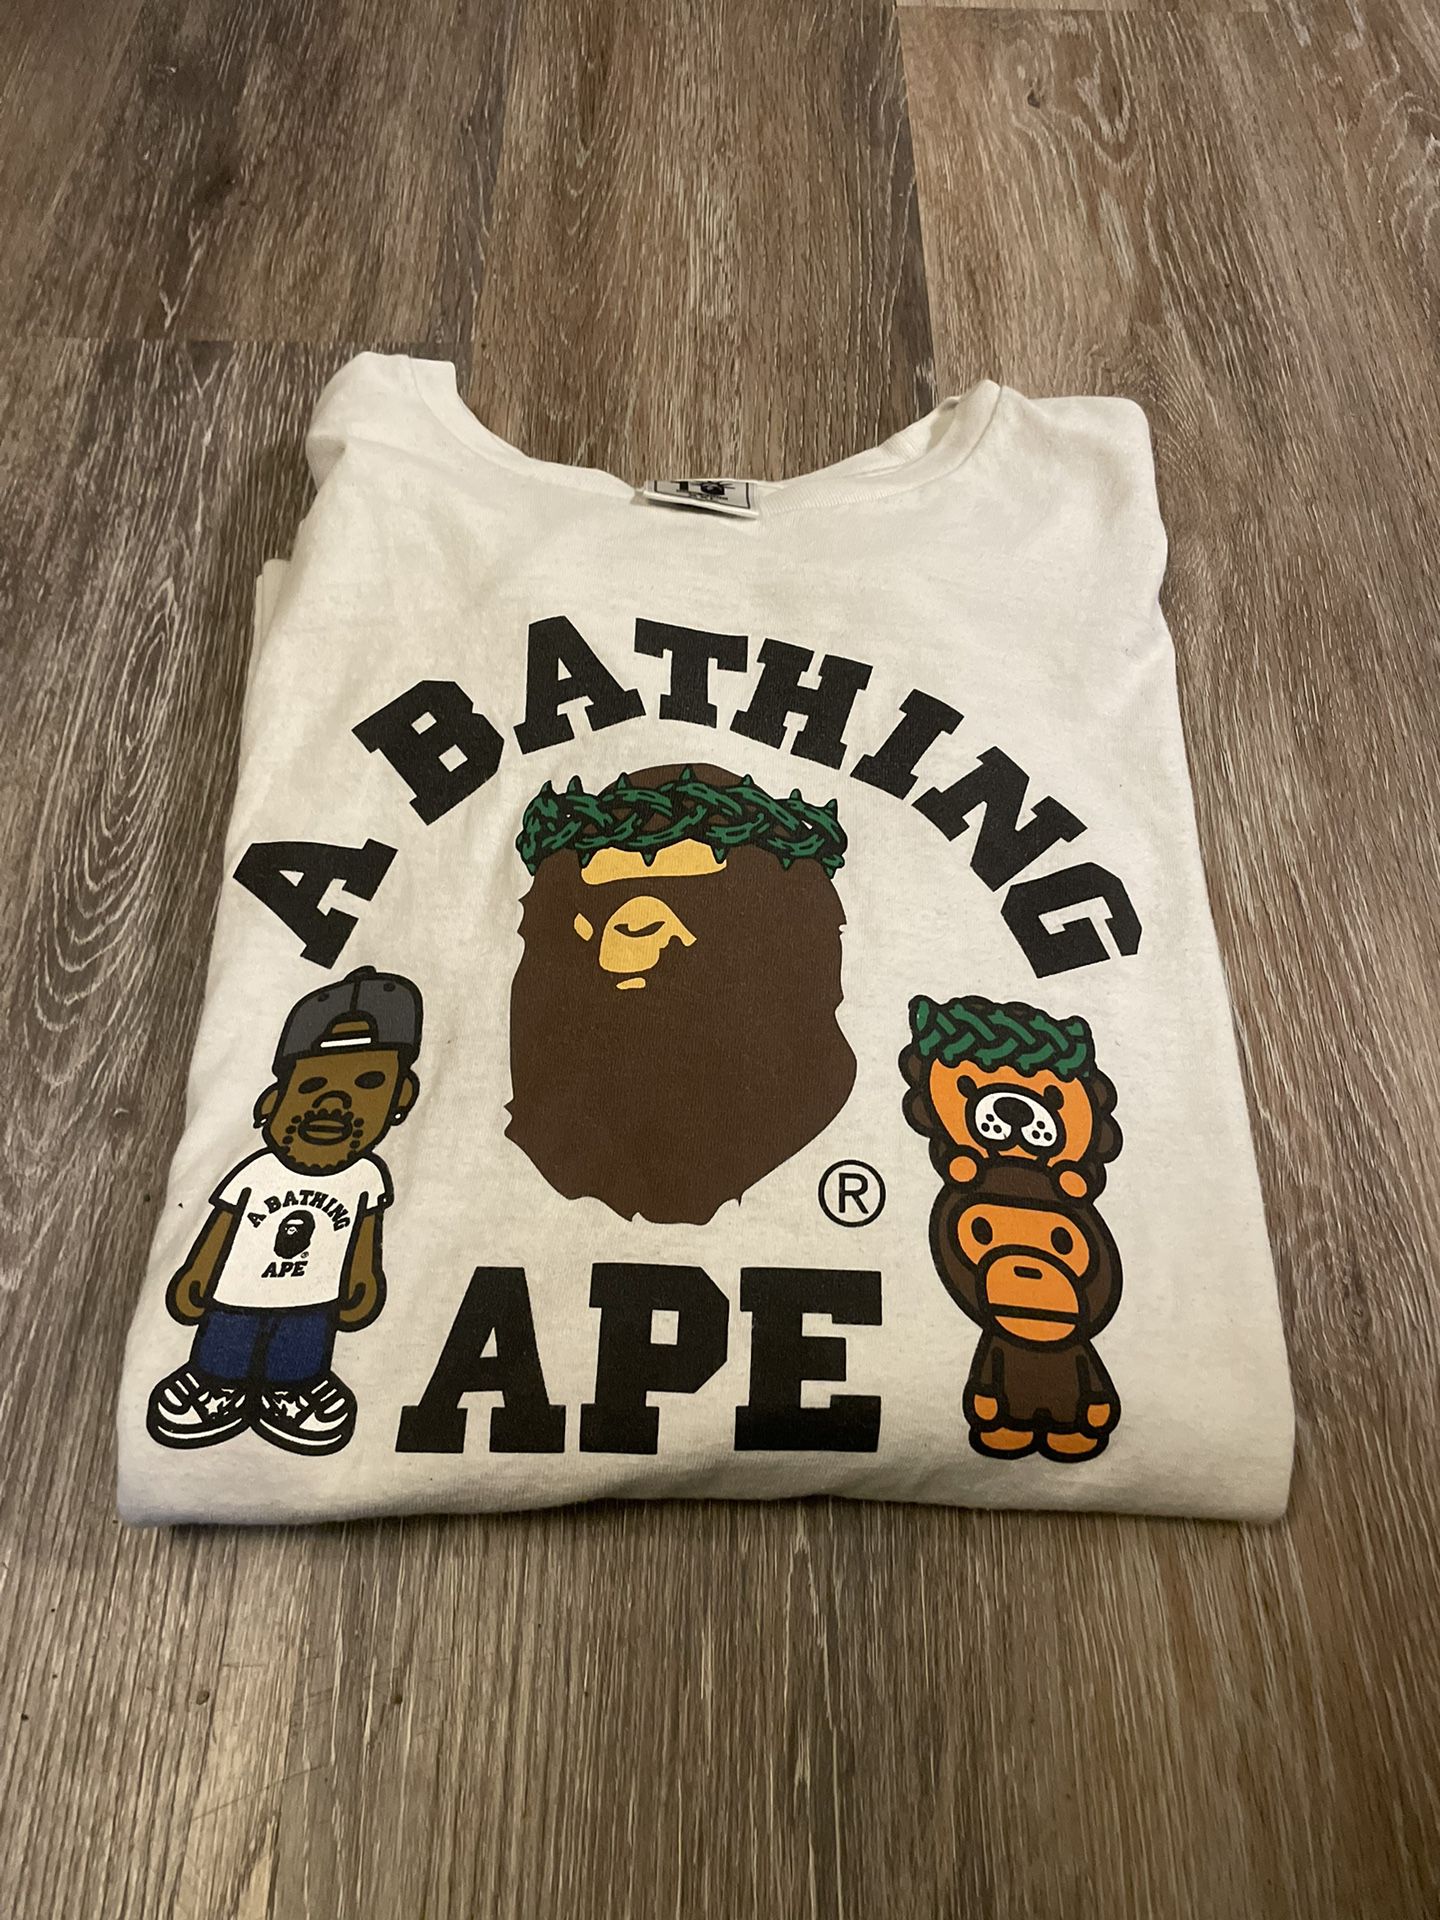 Bathing ape big sean x bape long sleeve(Best offer)